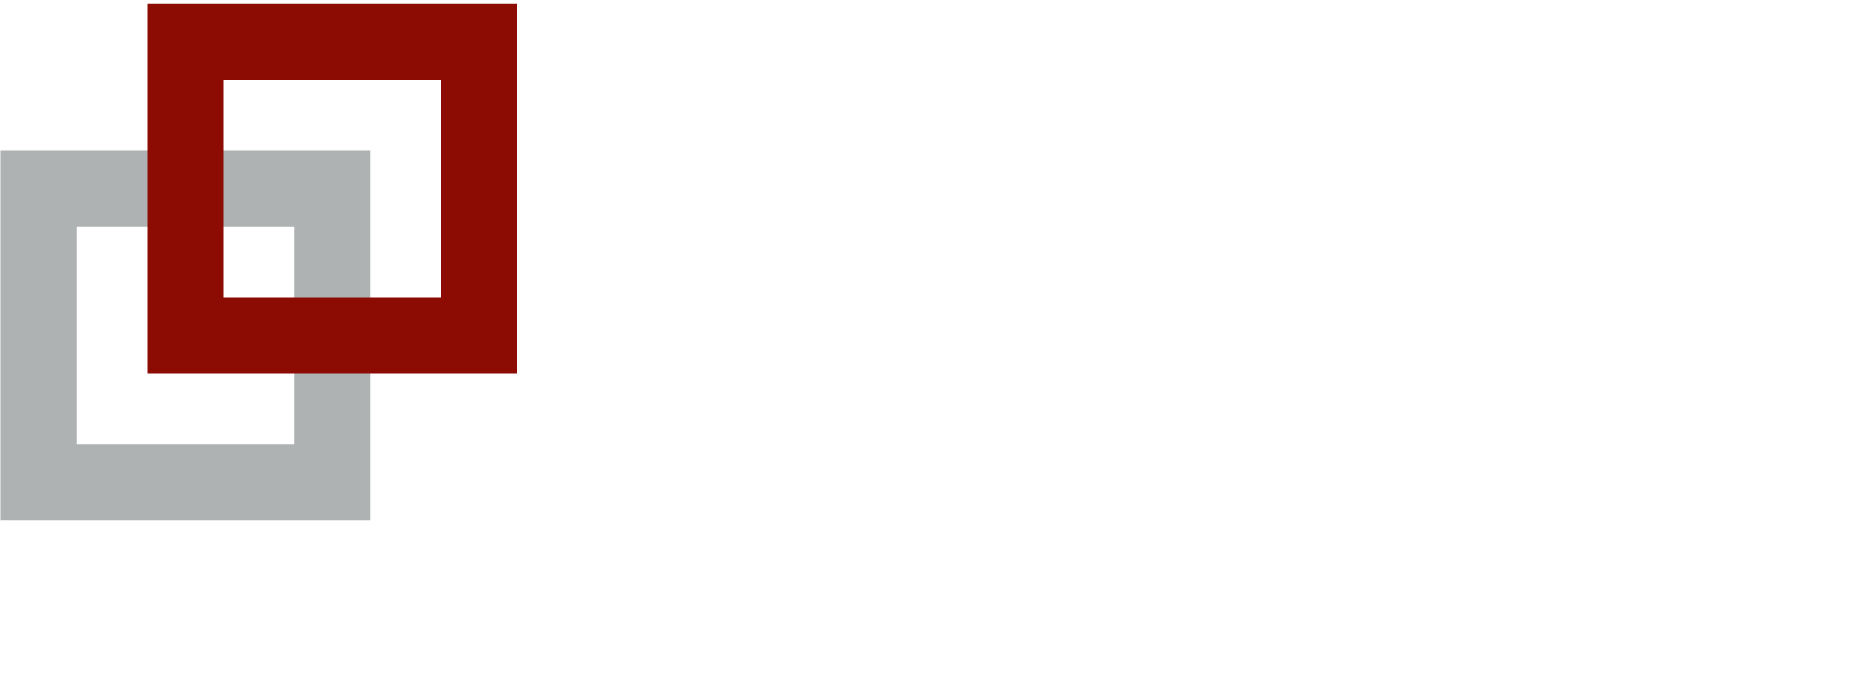 STEP: Skilled Trades Employment Program